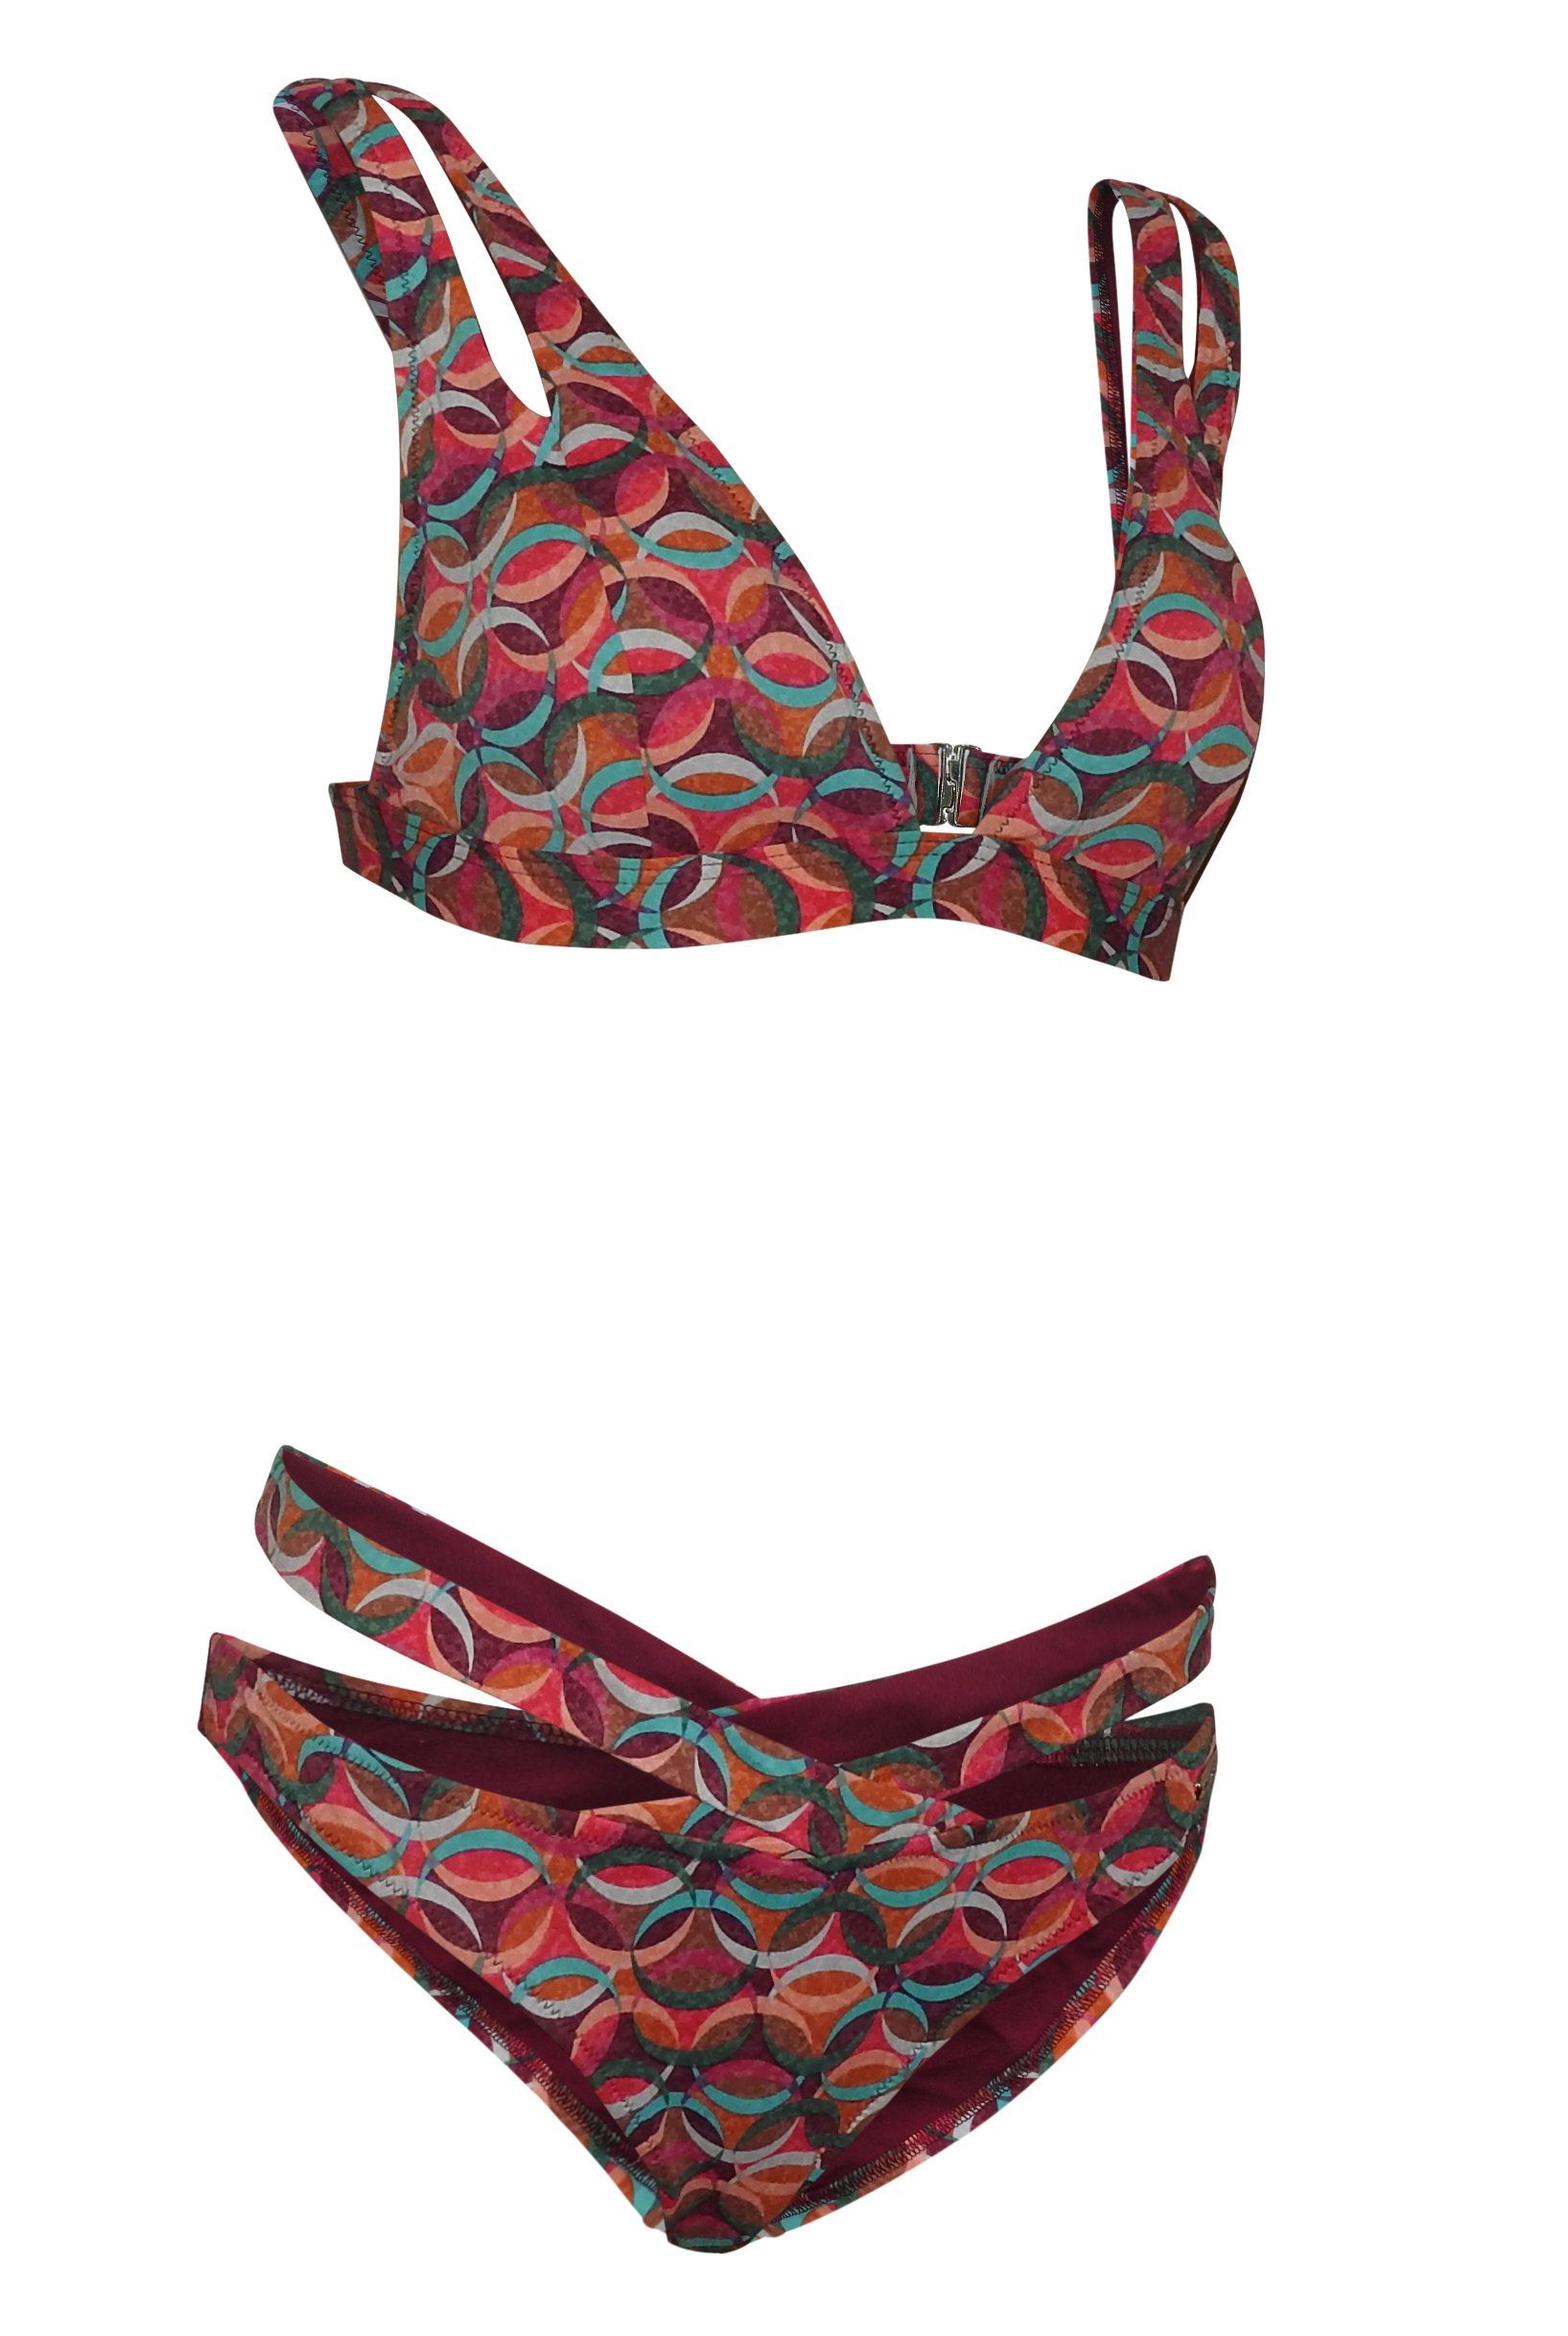 Bademode Bikinihose Triangel-Bikini (2-St) dynamic24 Bikini C/D Bikinitop Badehose Triangel